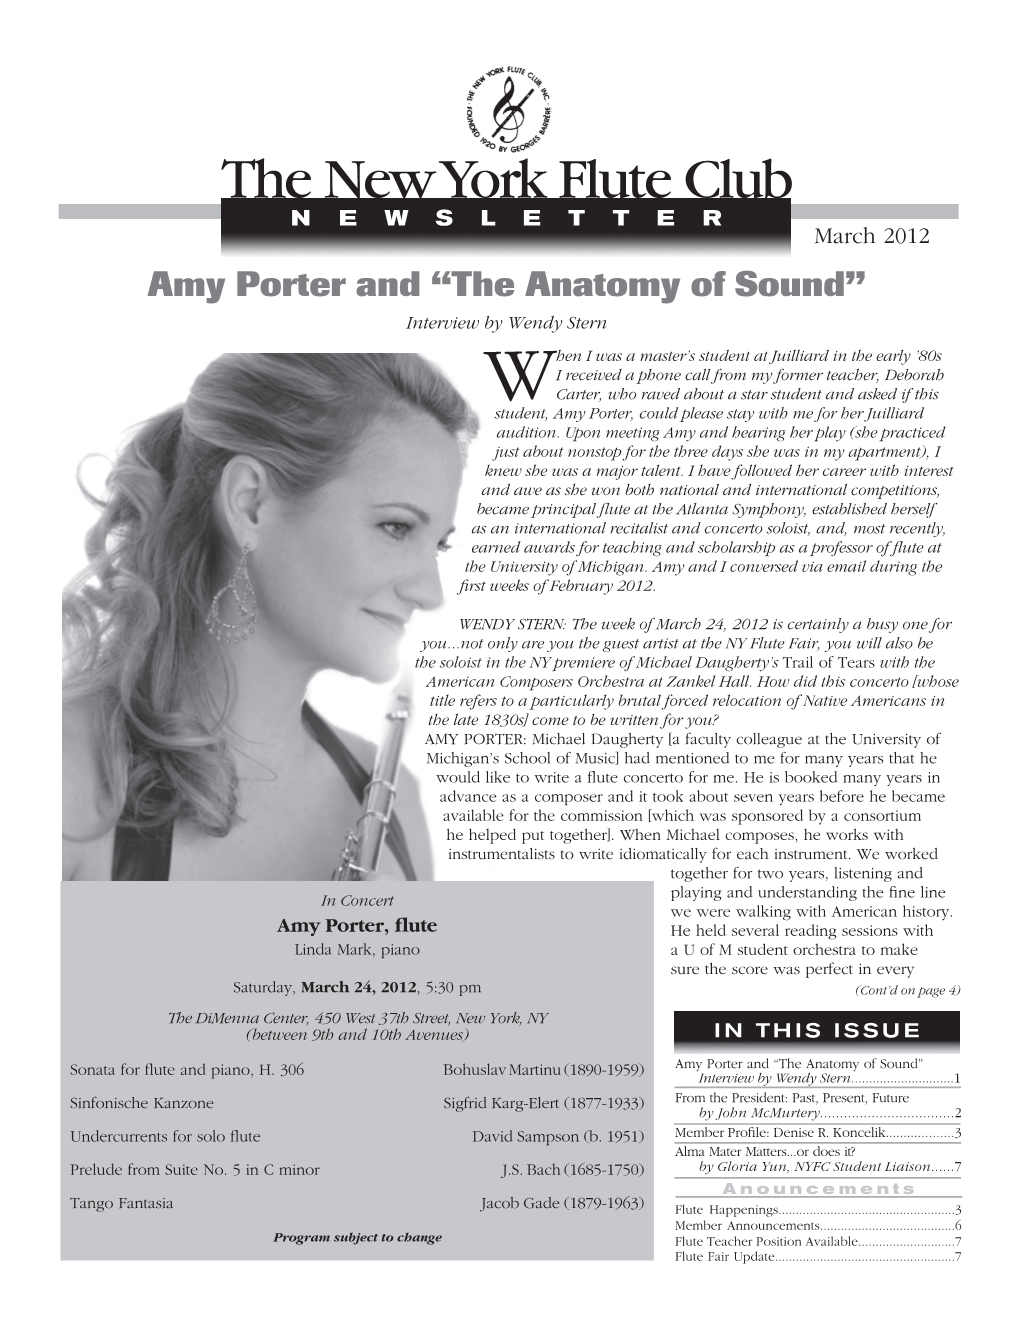 New York Flute Club Newsletter Interview 2012